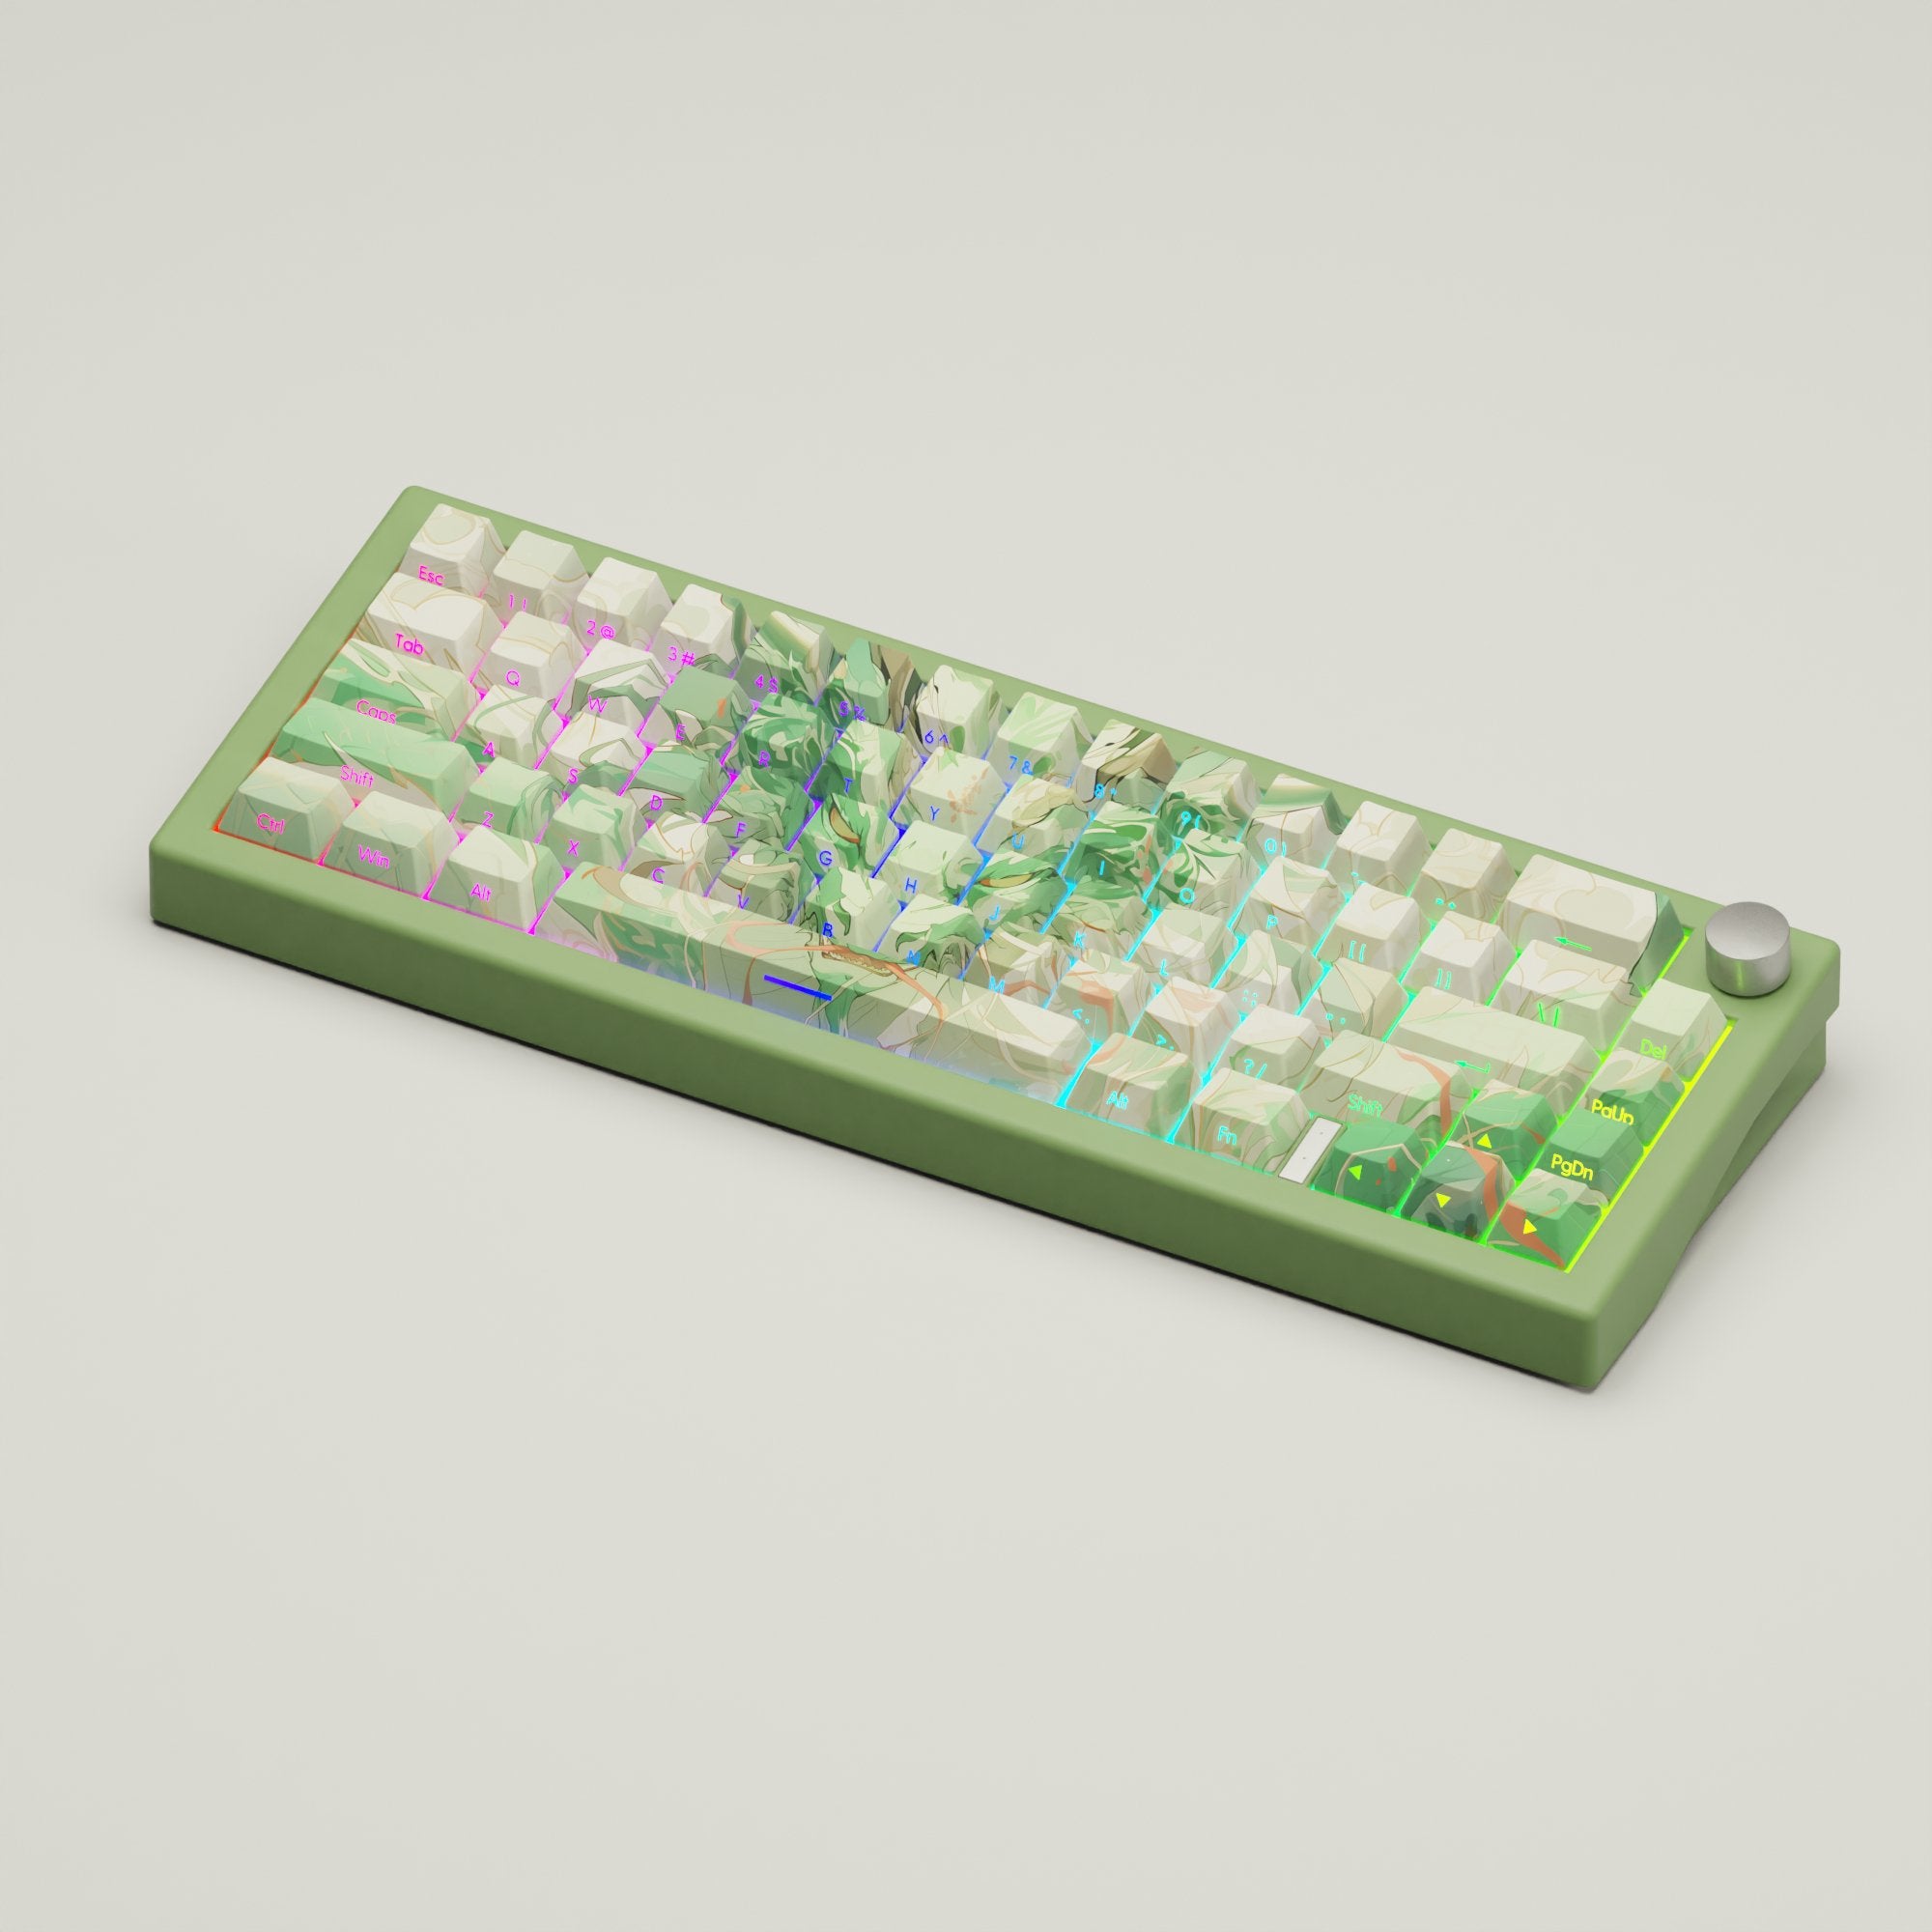 Wind Dragon GMK67 Keyboard | Designed By Serenity Starlight